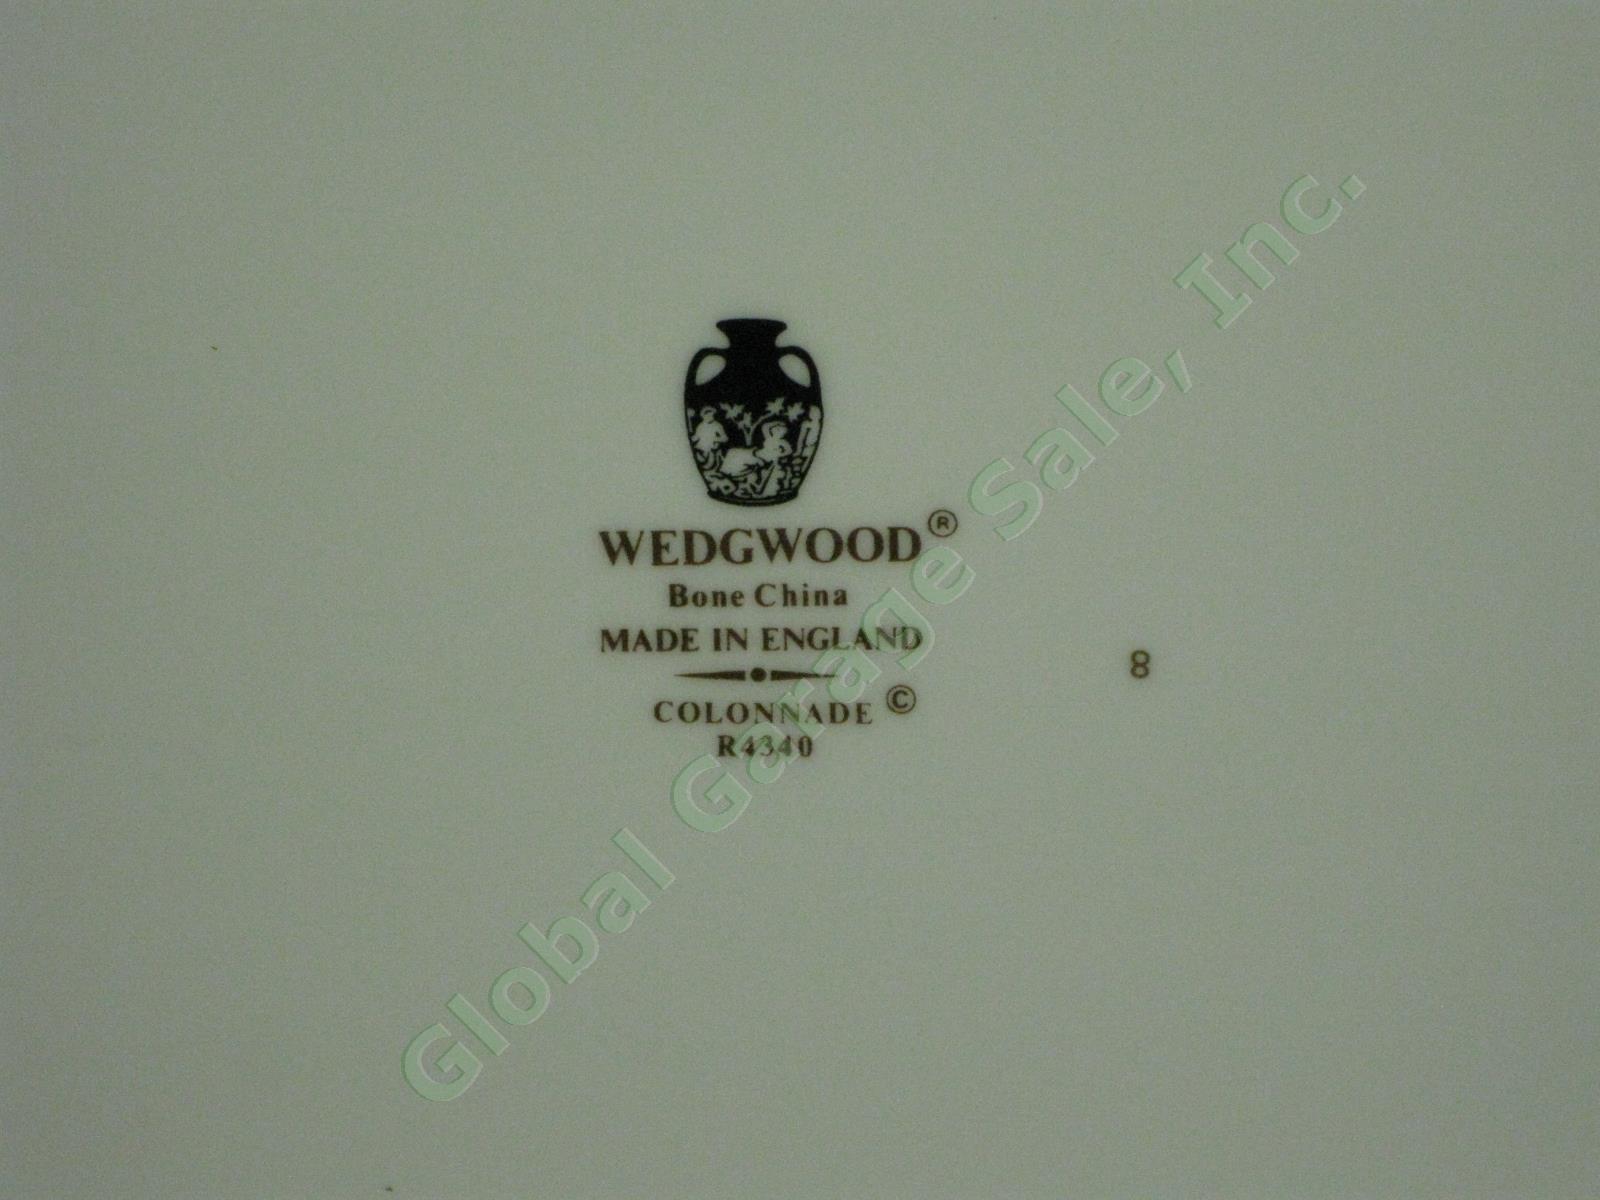 4 RARE 10.5" Inch Wedgwood Colonnade Black Dinner Plates England Bone China NR 4